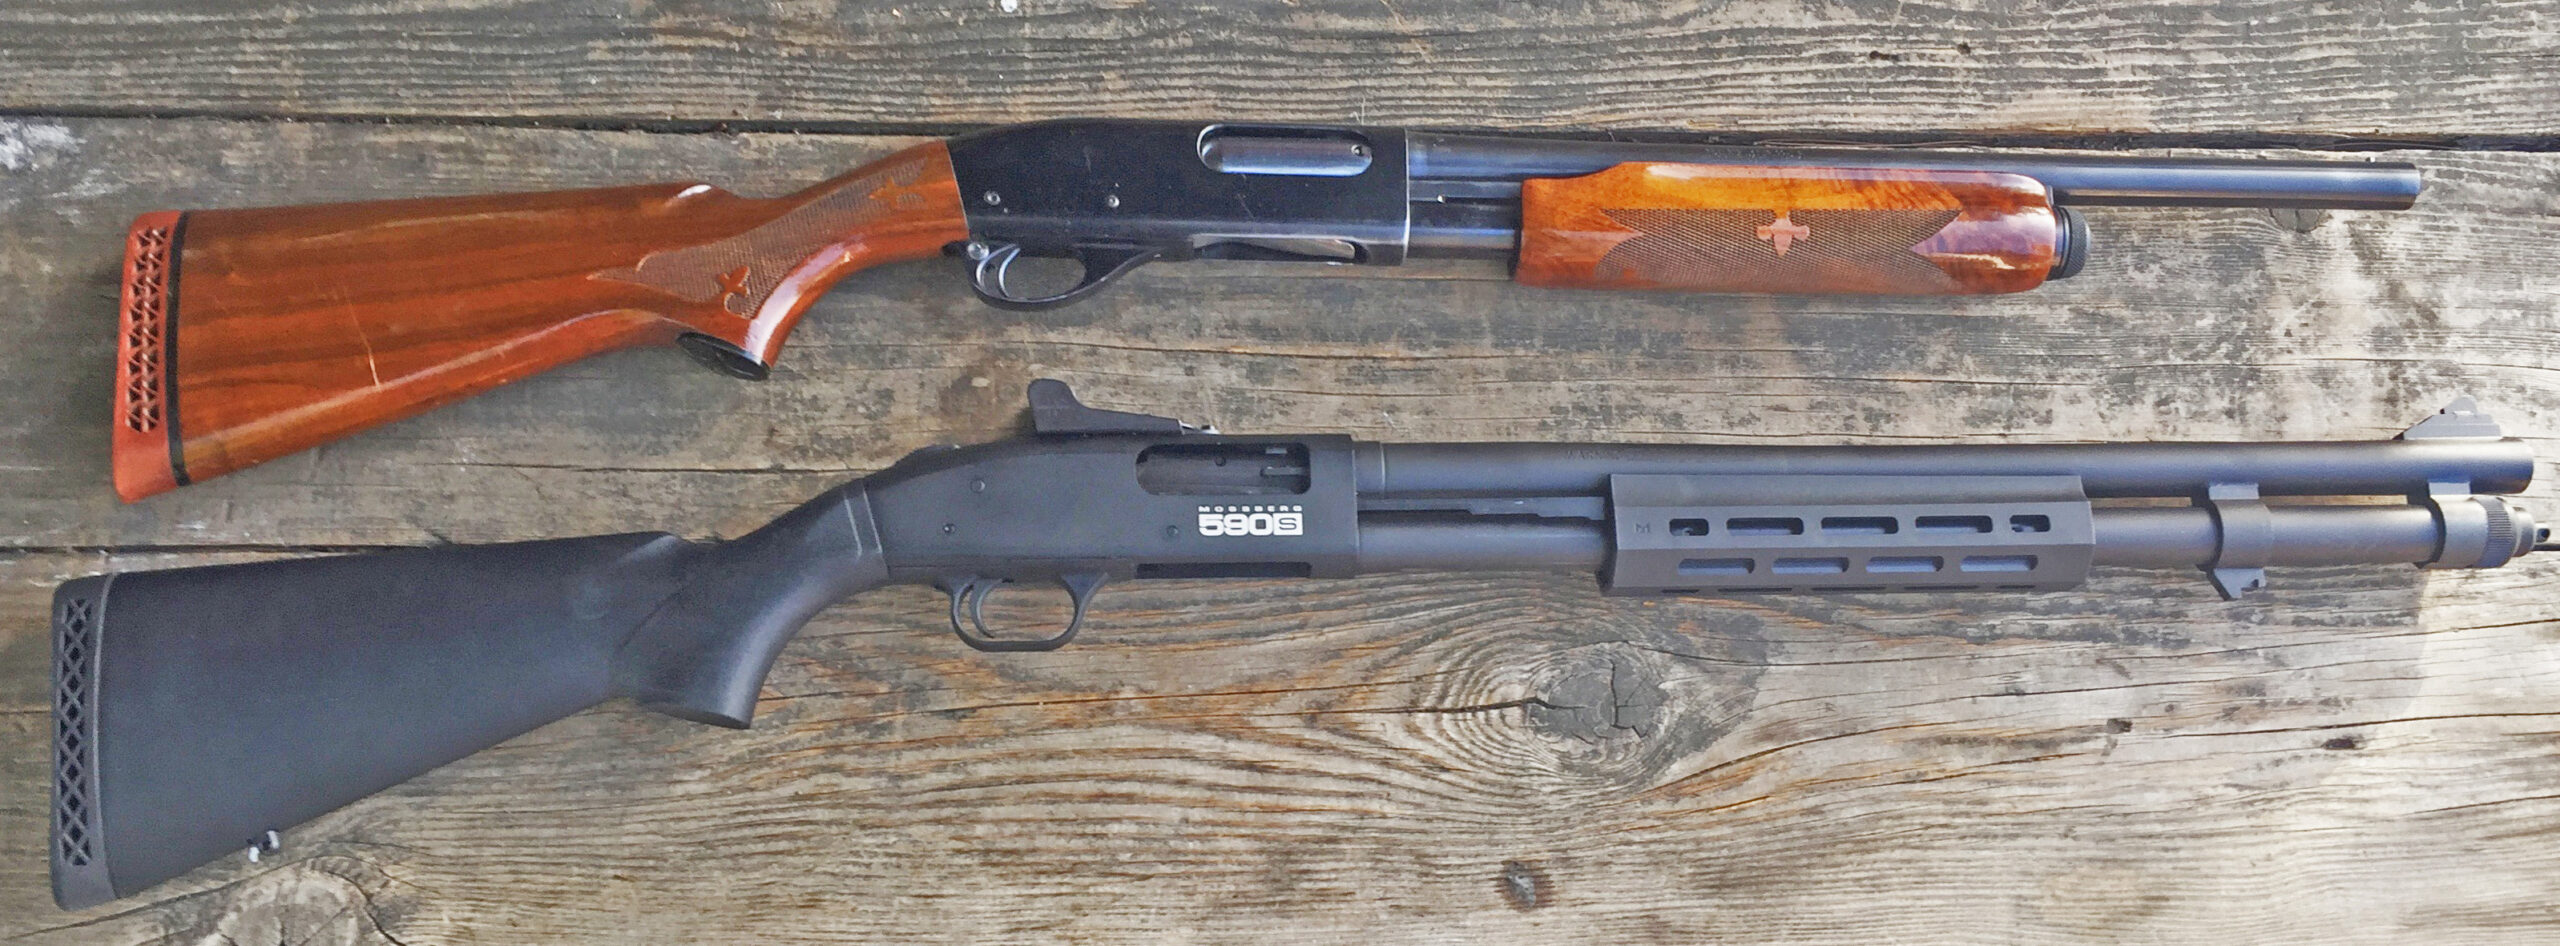 Shotgun Review: Mossberg's 590S Pump Shotgun | Outdoor Life